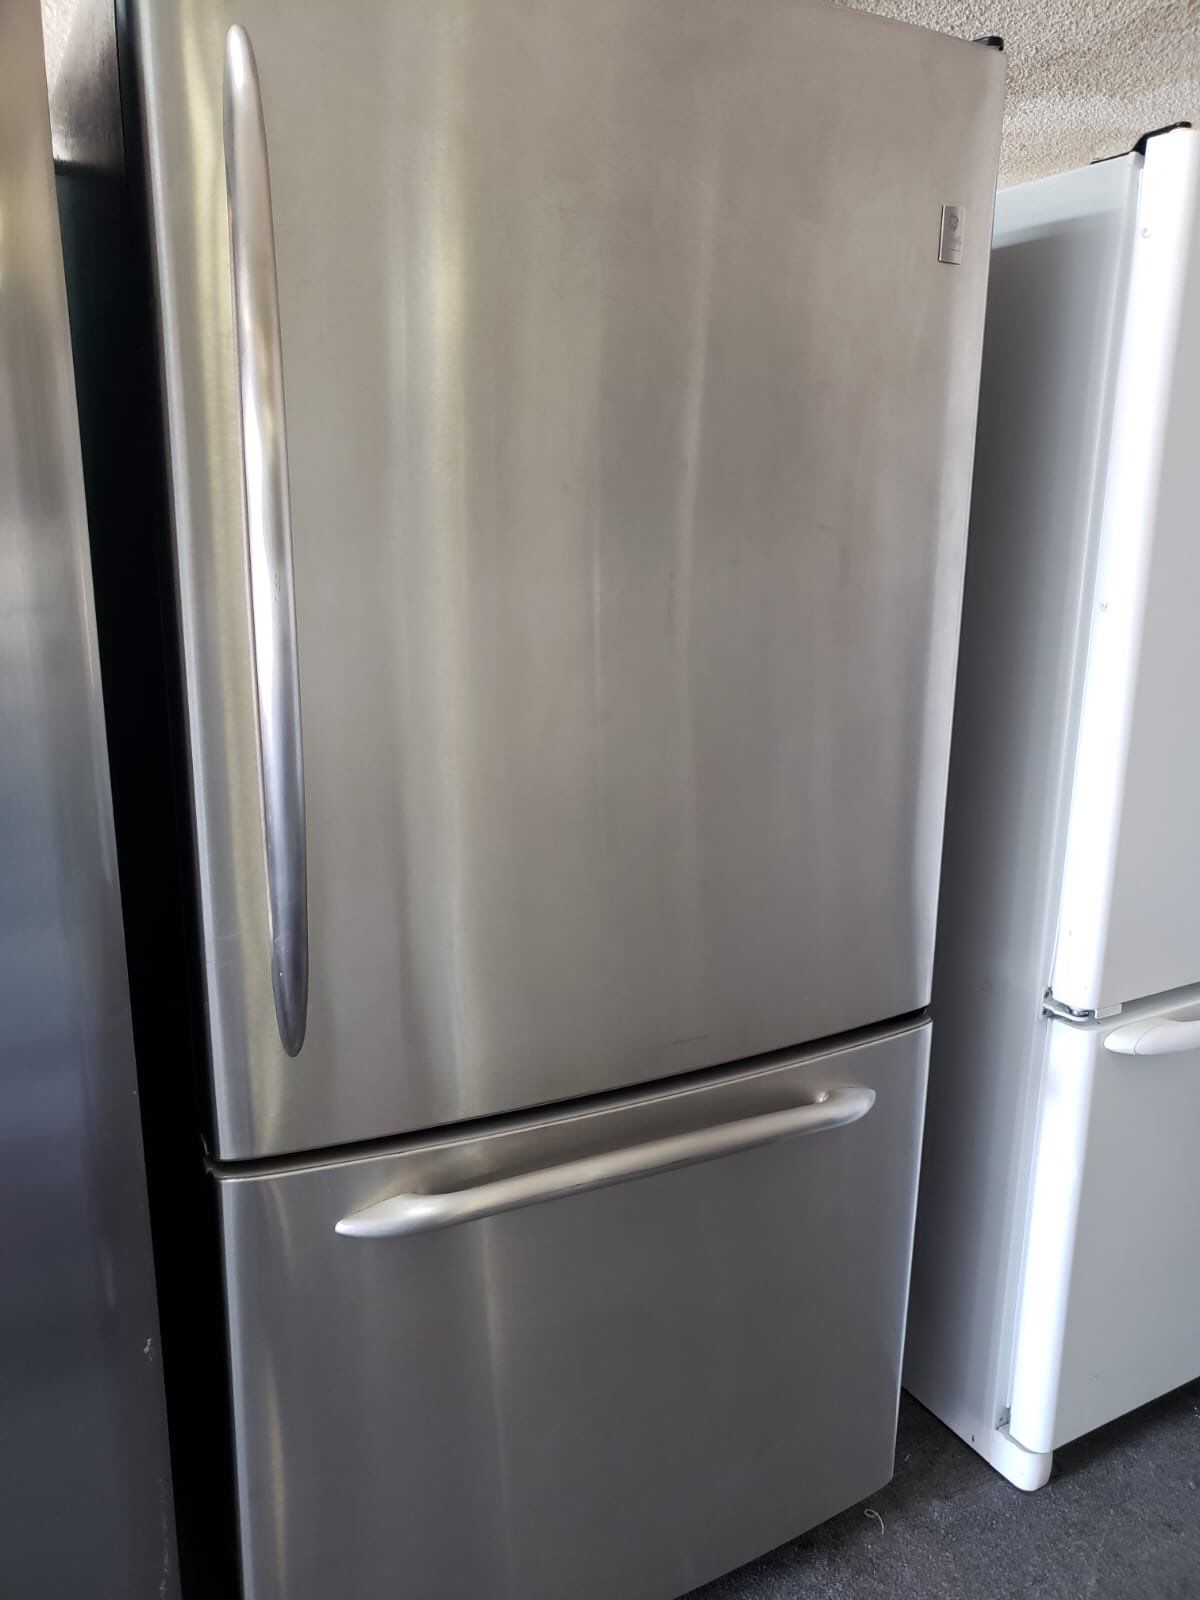 GE Refrigerator Fridge With Warranty 33 in. Wide #792